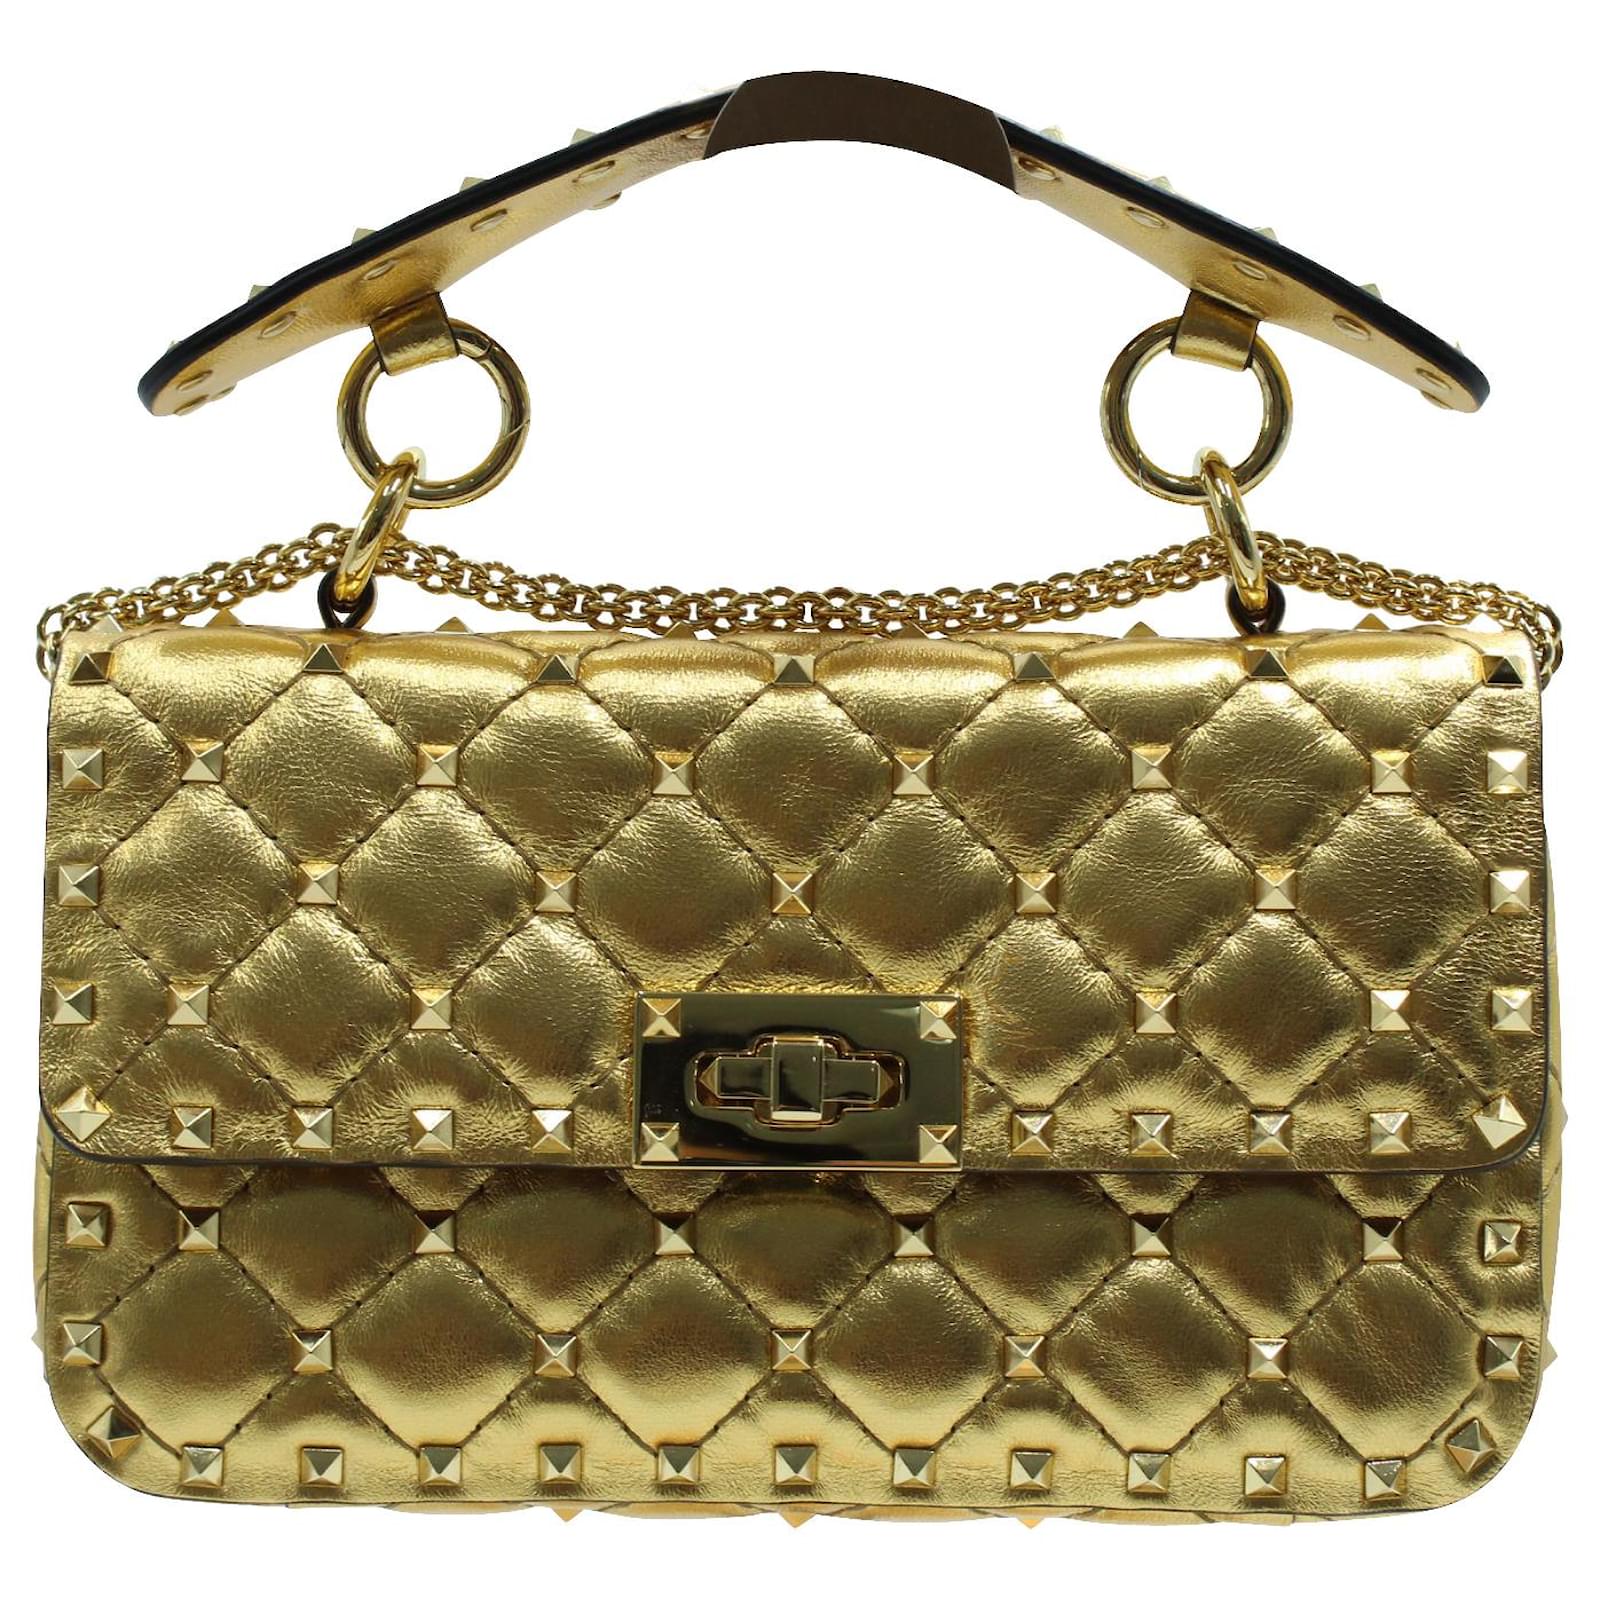 Rockstud Spike Small Shoulder Bag in Gold - Valentino Garavani